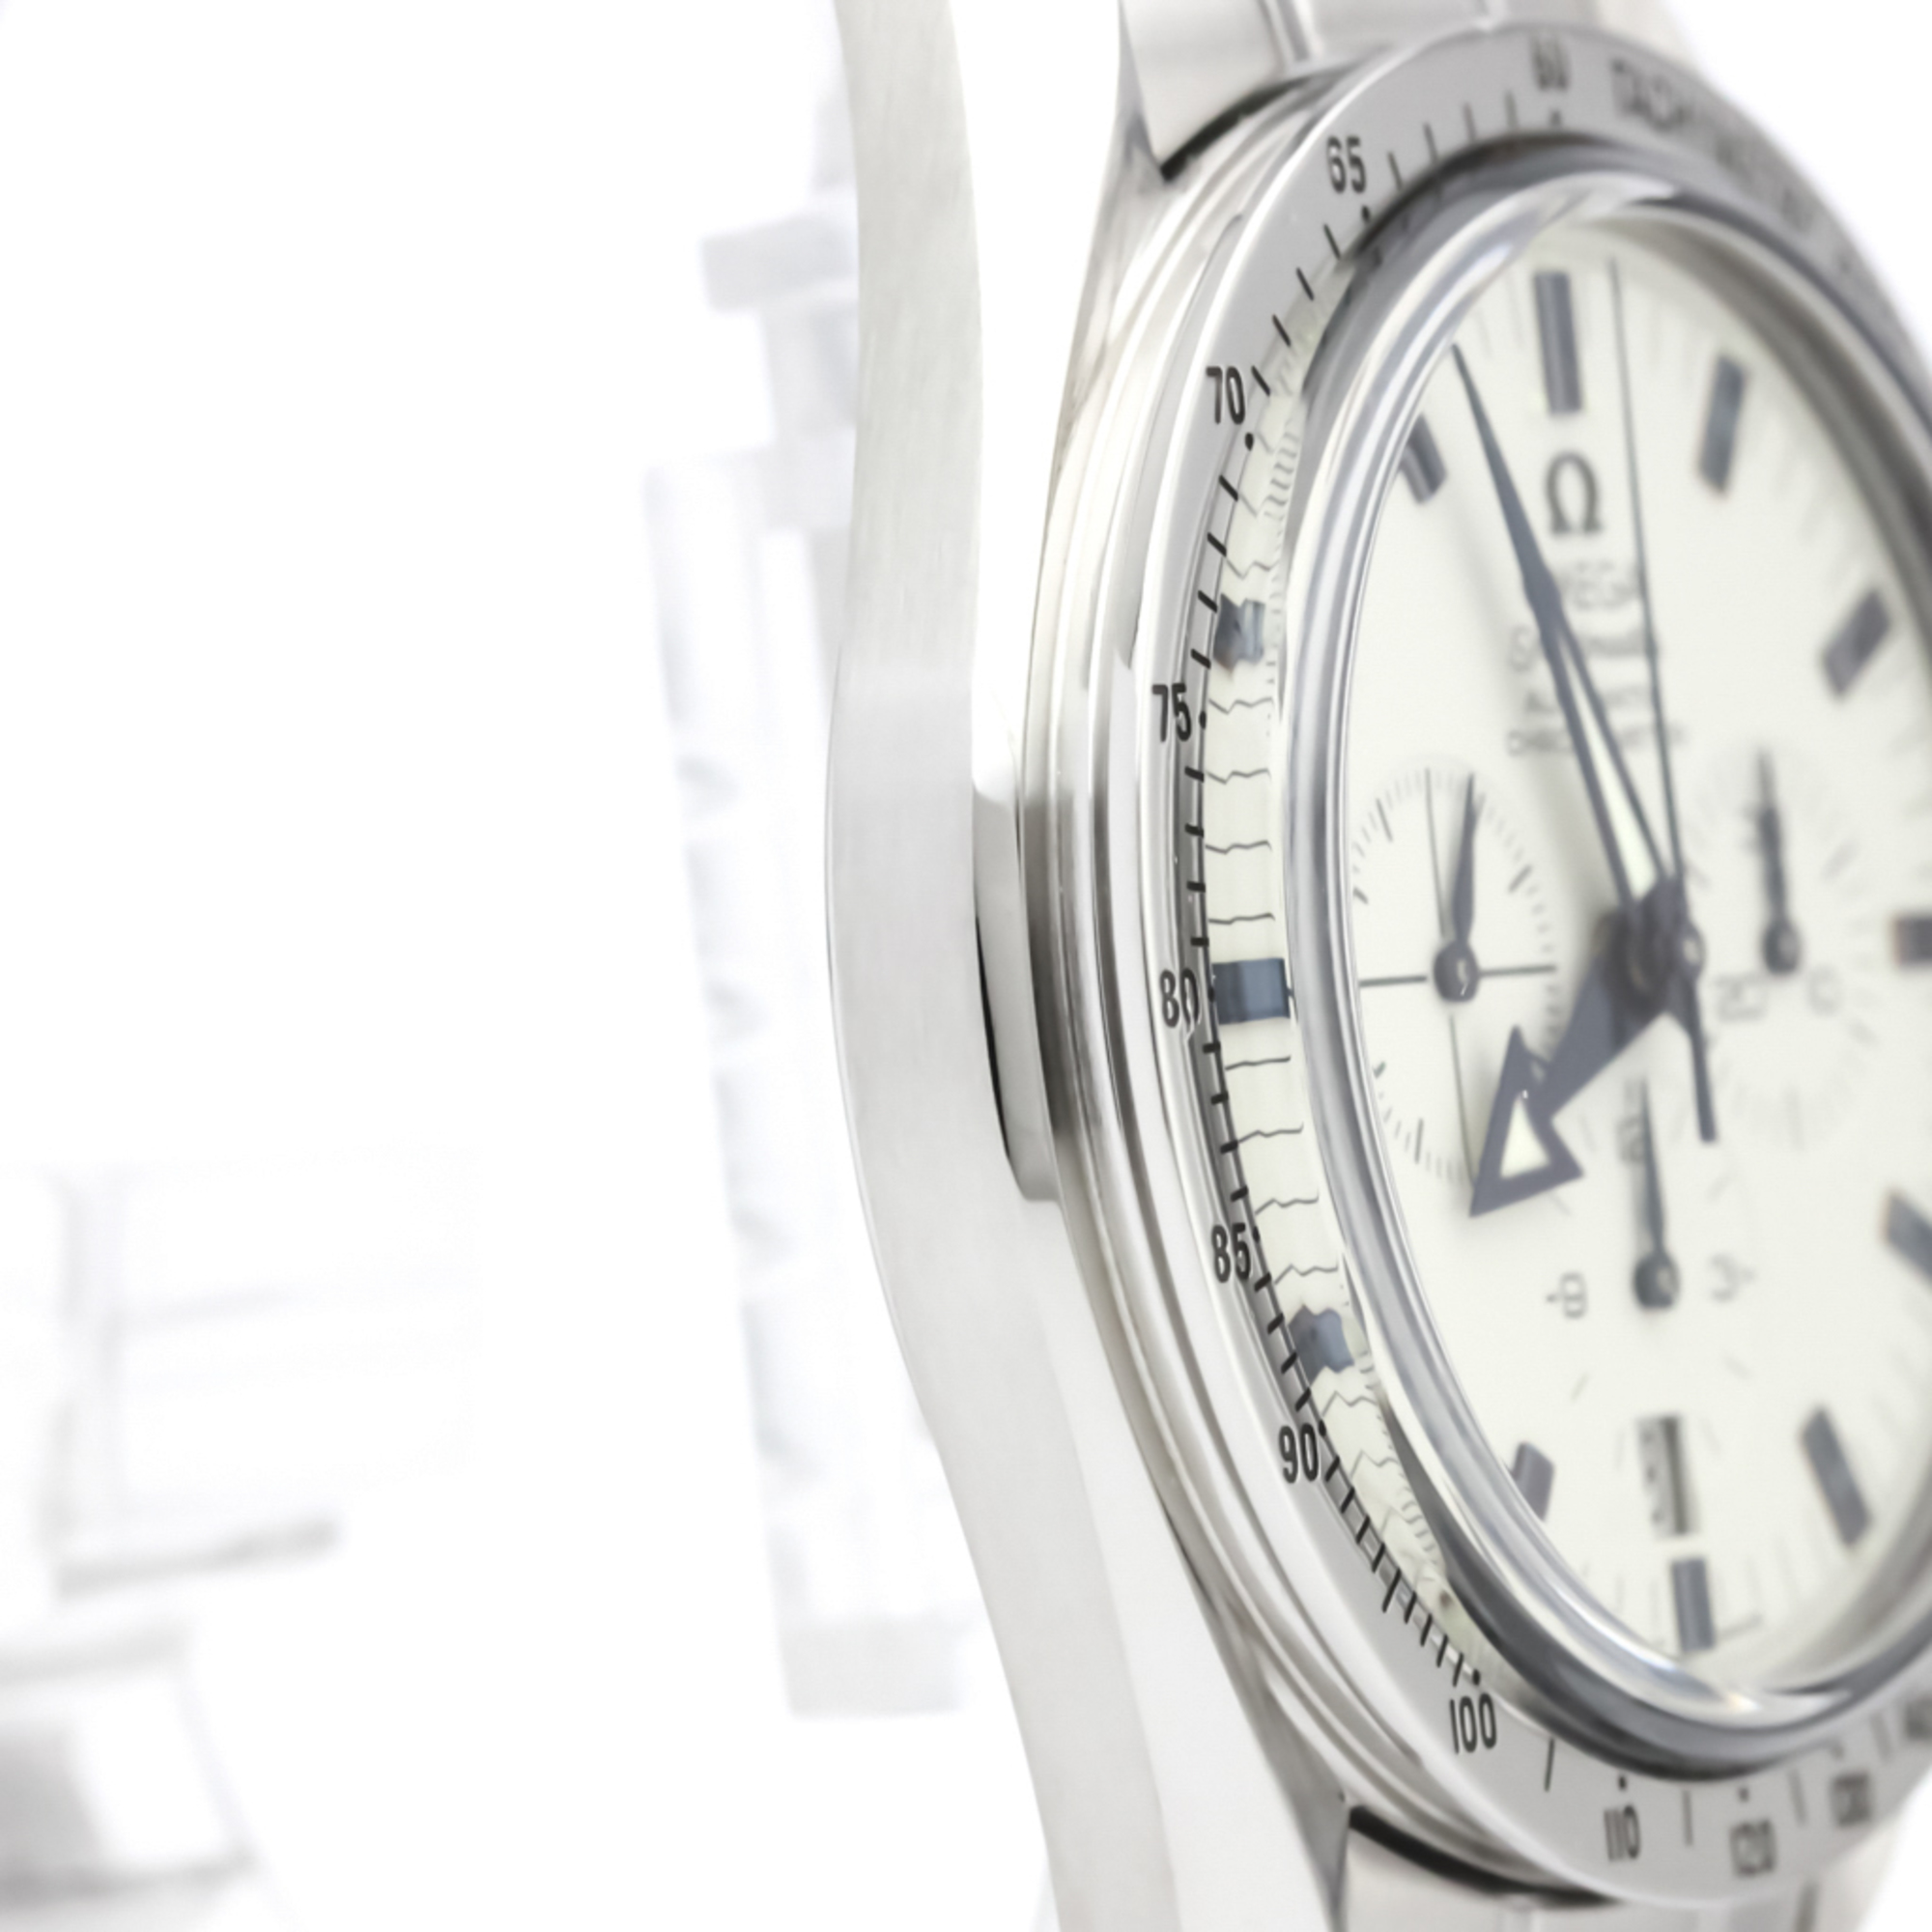 OMEGA Speedmaster Broad Arrow Steel Automatic Watch 3551.20